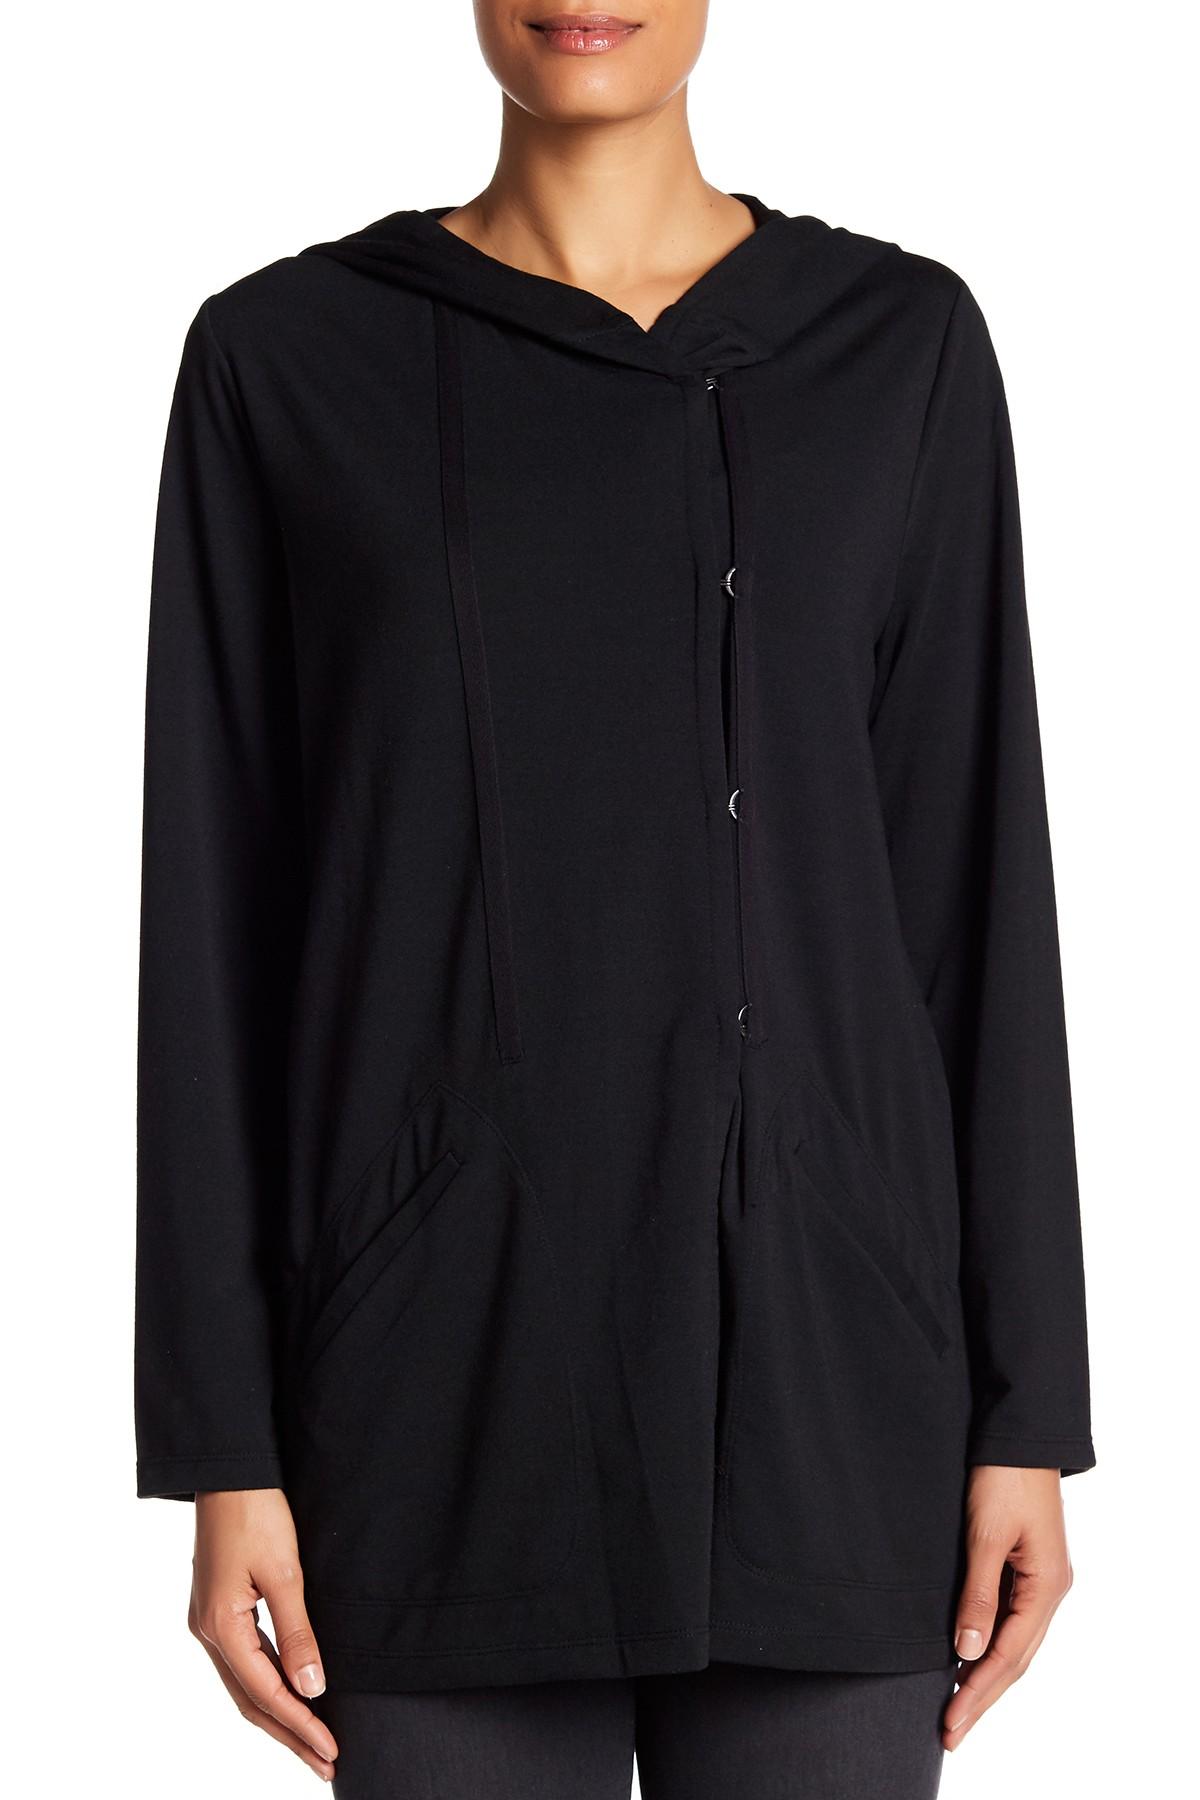 Lyst - Max Studio Knit Hooded Jacket in Black